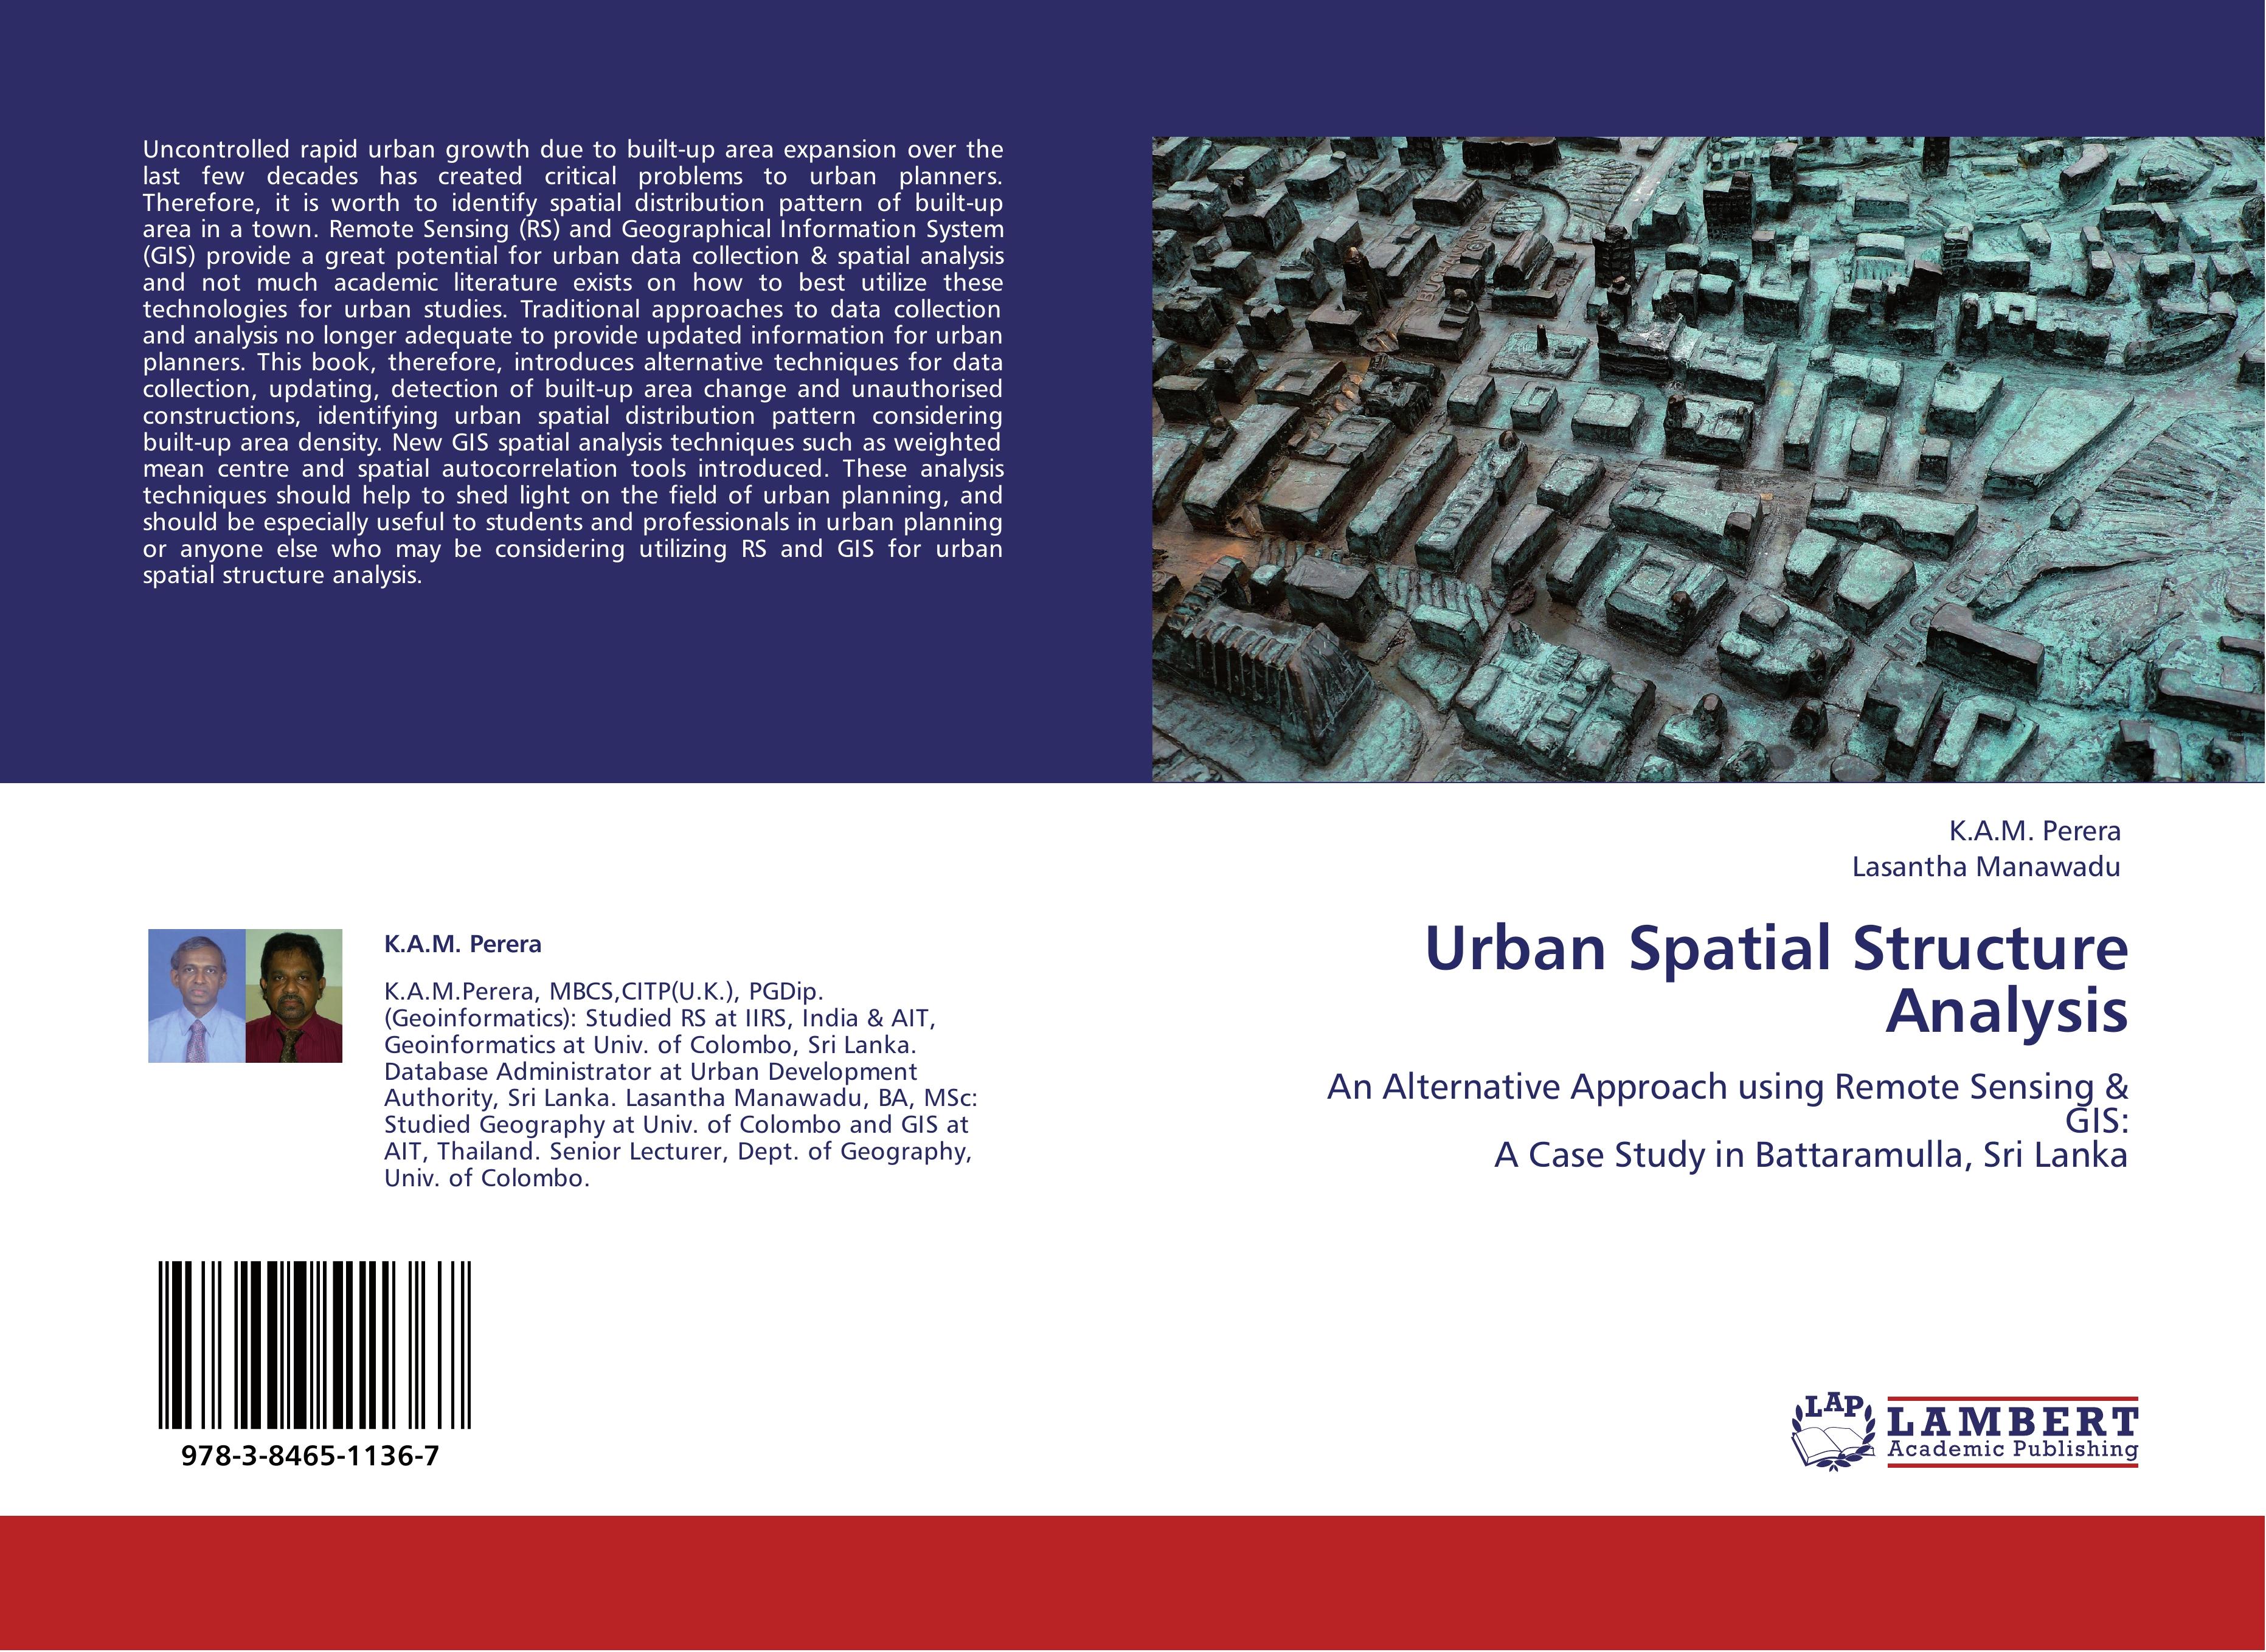 Urban Spatial Structure Analysis - K.A.M. Perera|Lasantha Manawadu